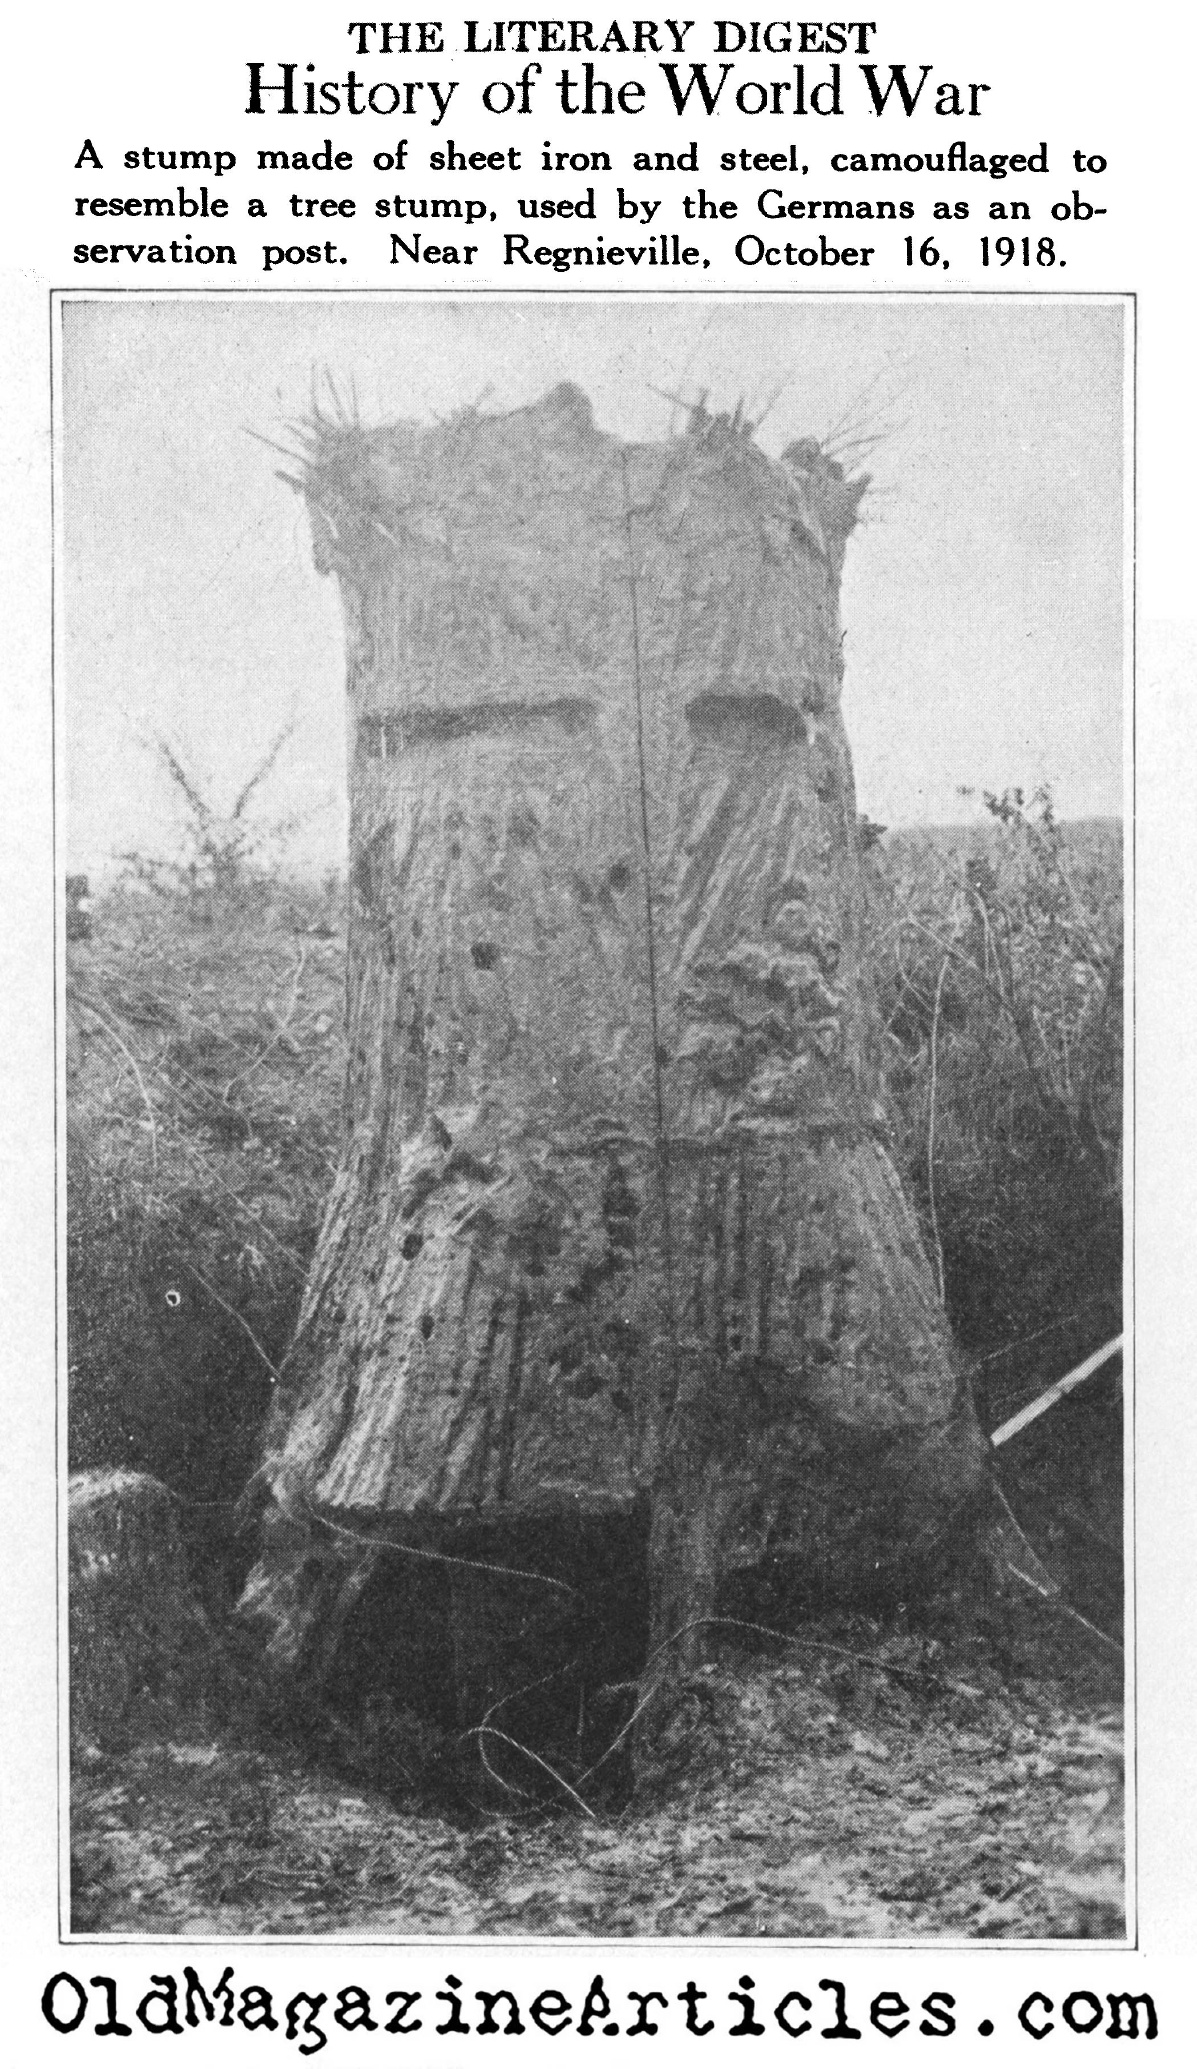 The Steel Tree Stump, Part II (Literary Digest, 1919)